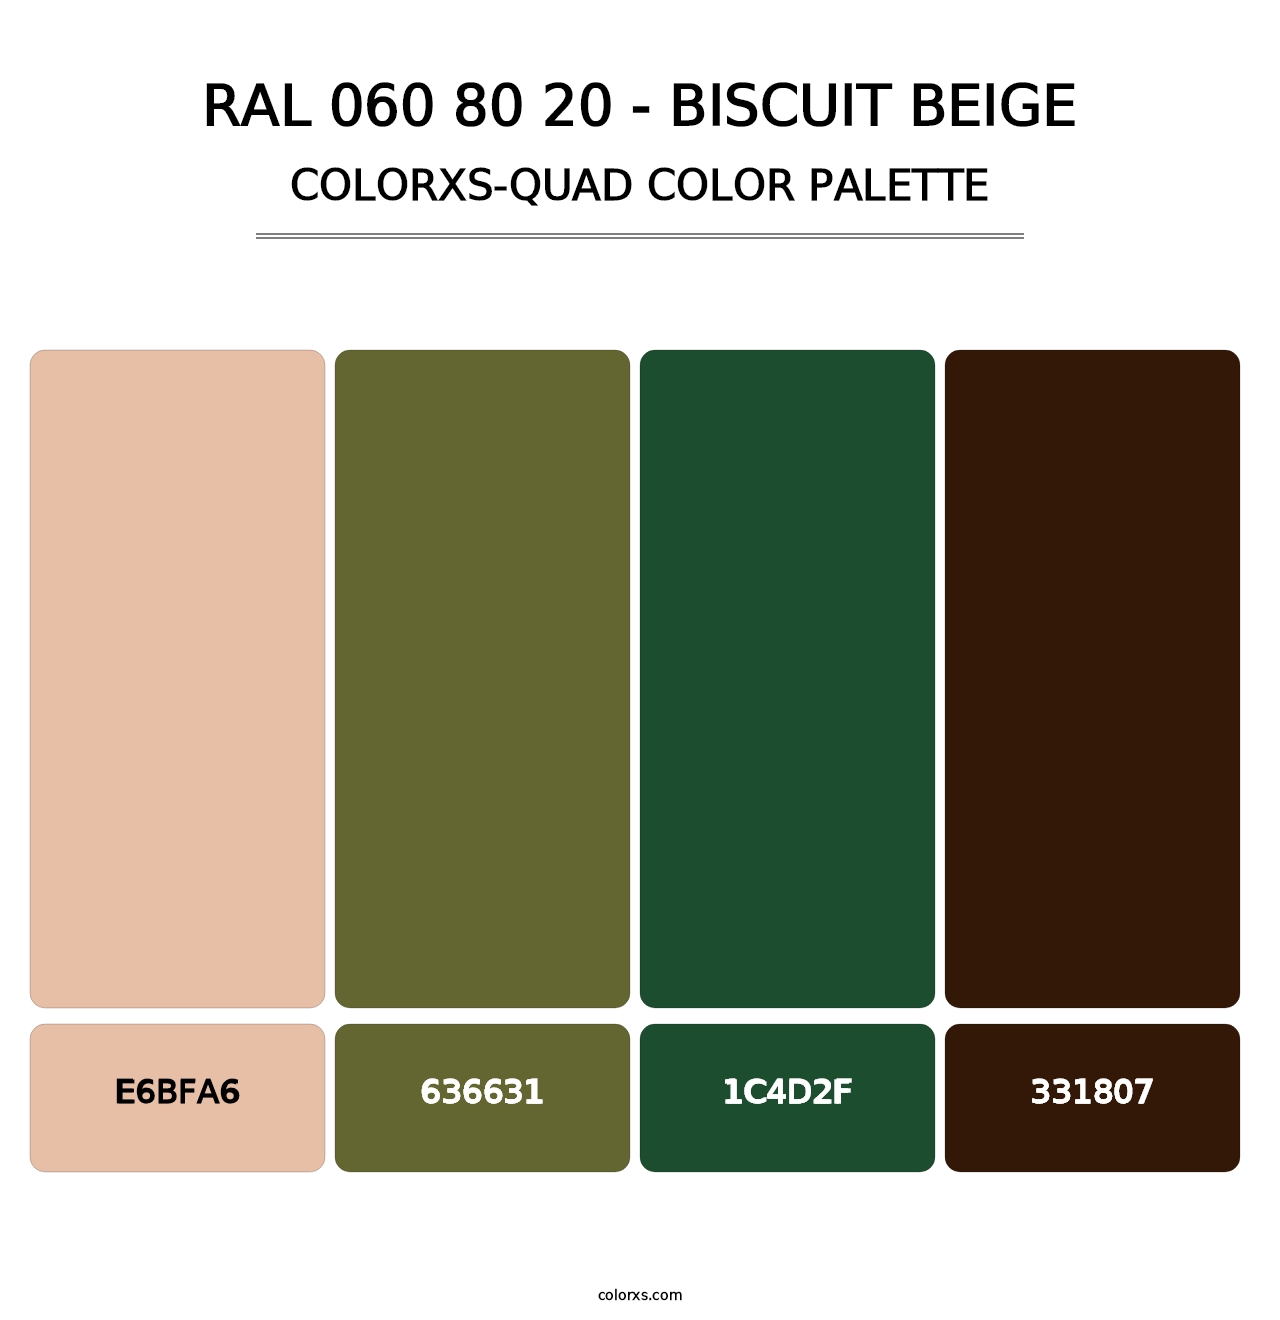 RAL 060 80 20 - Biscuit Beige - Colorxs Quad Palette